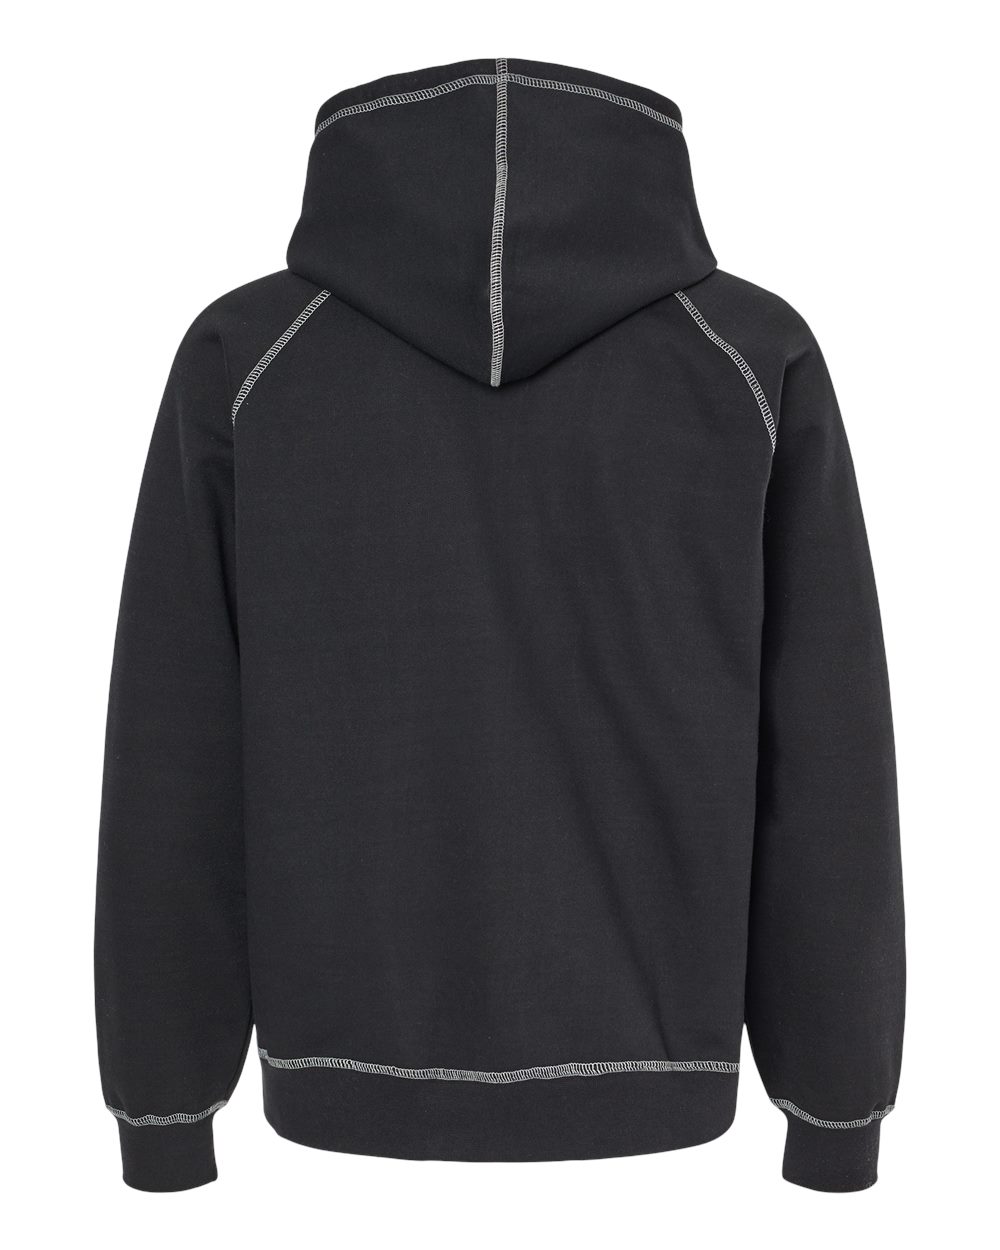 King Fashion KP8017 - Extra Heavy Full-Zip Hooded Sweatshirt